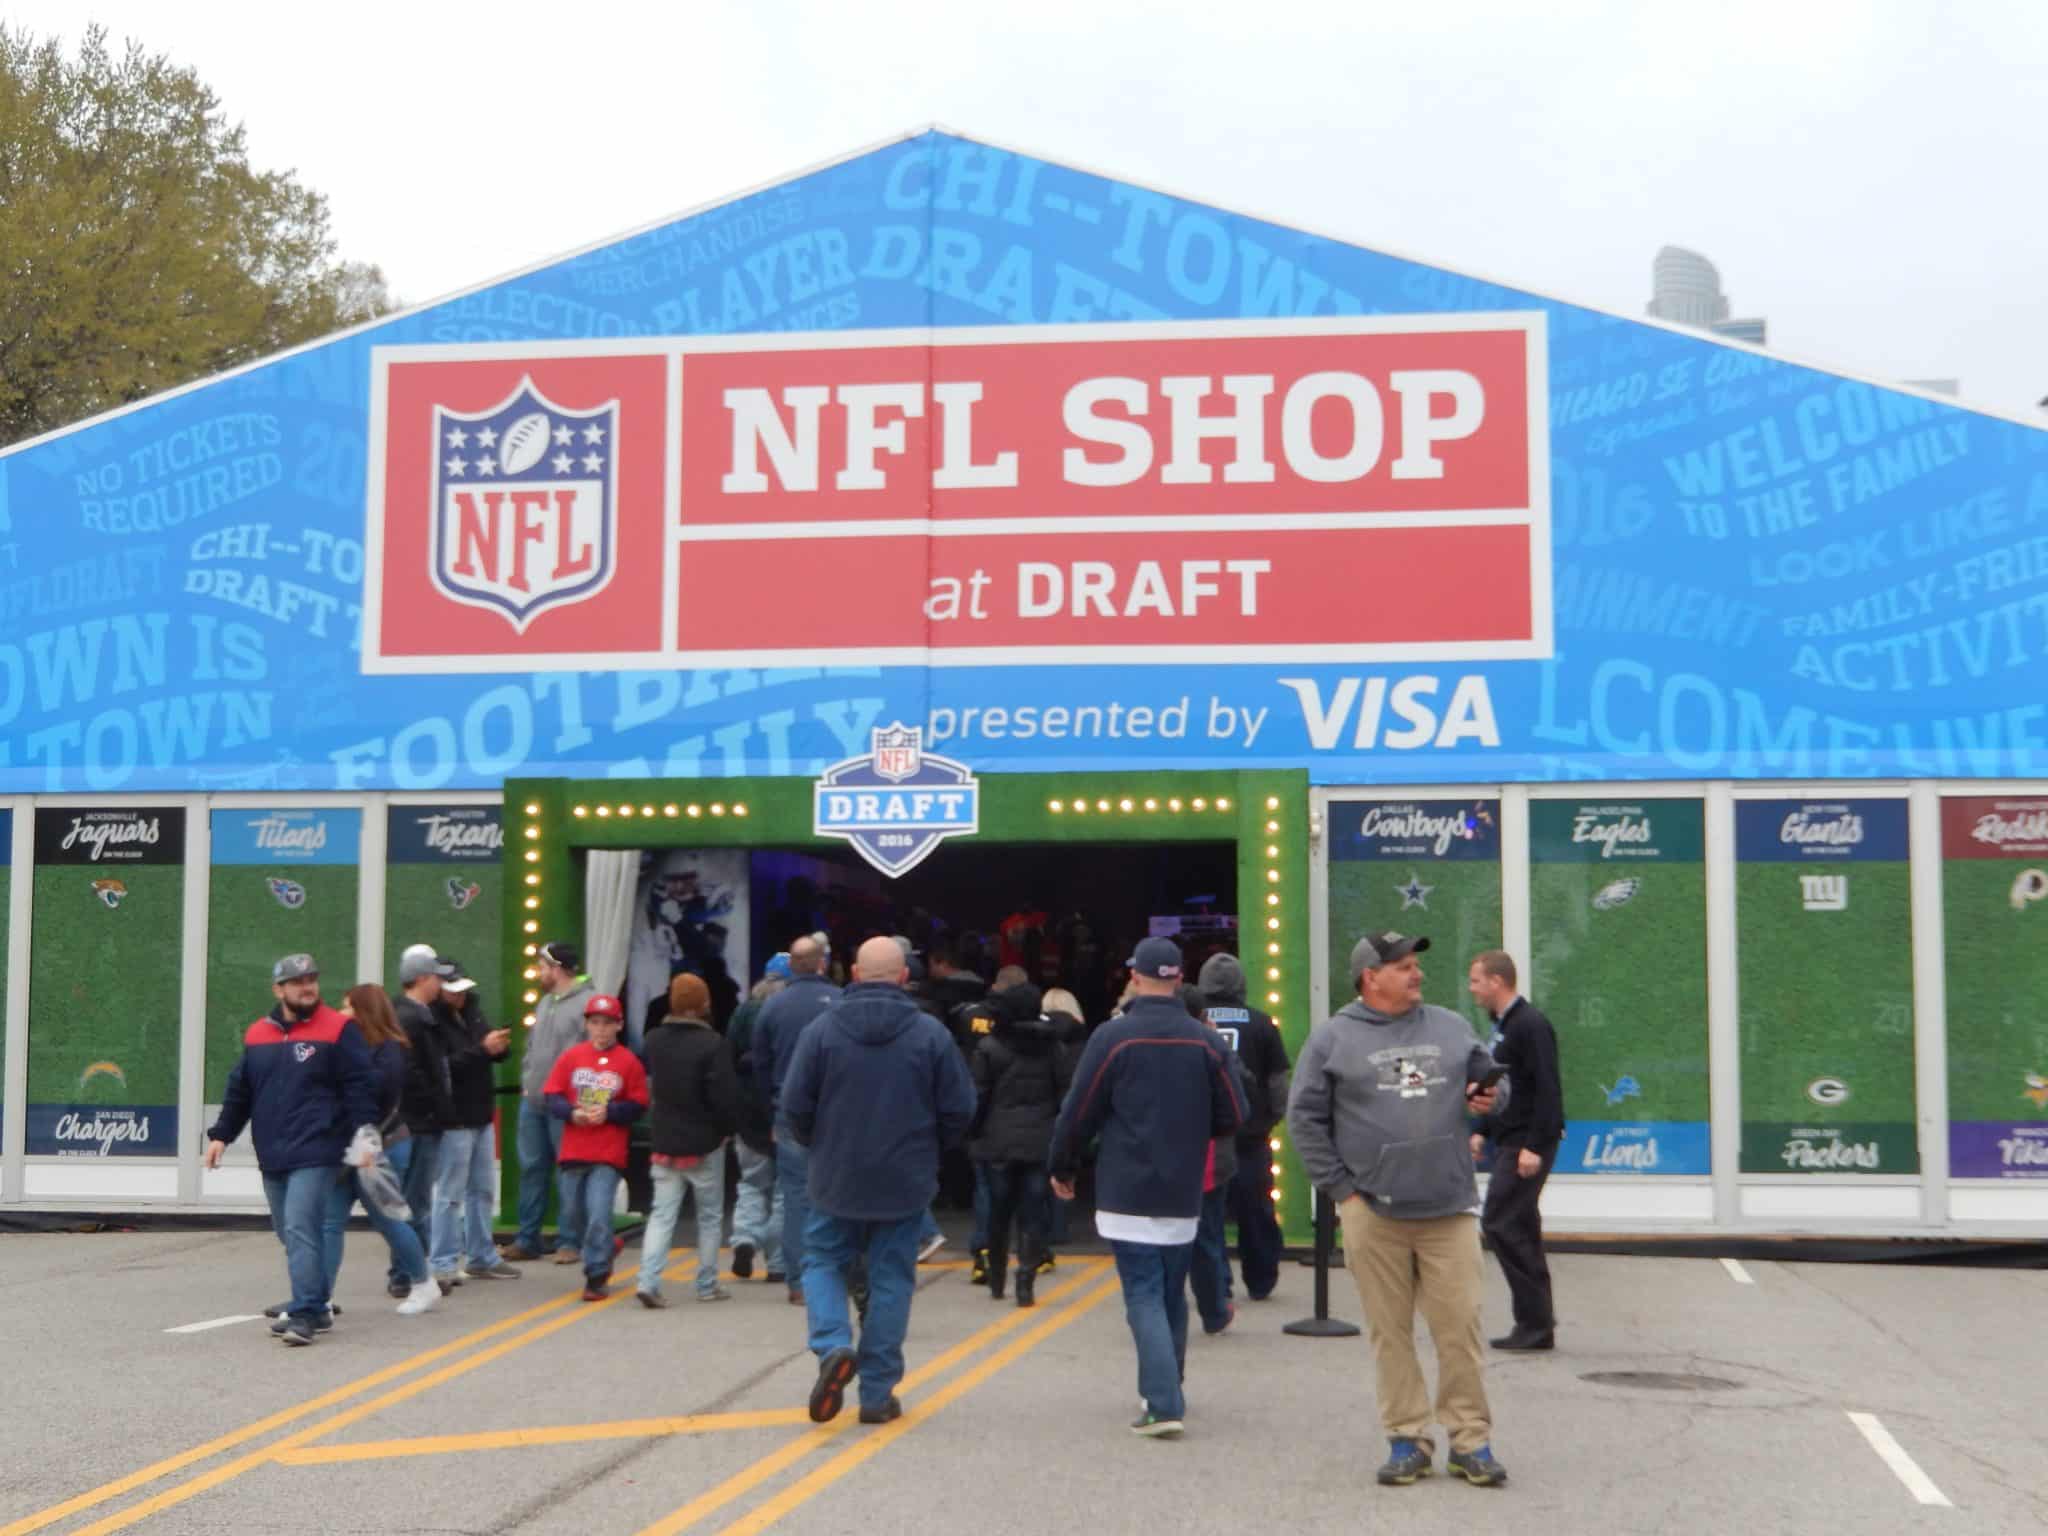 NFL Draft Shop. Photo Credit: Swimfinfan | Under Creative Commons License